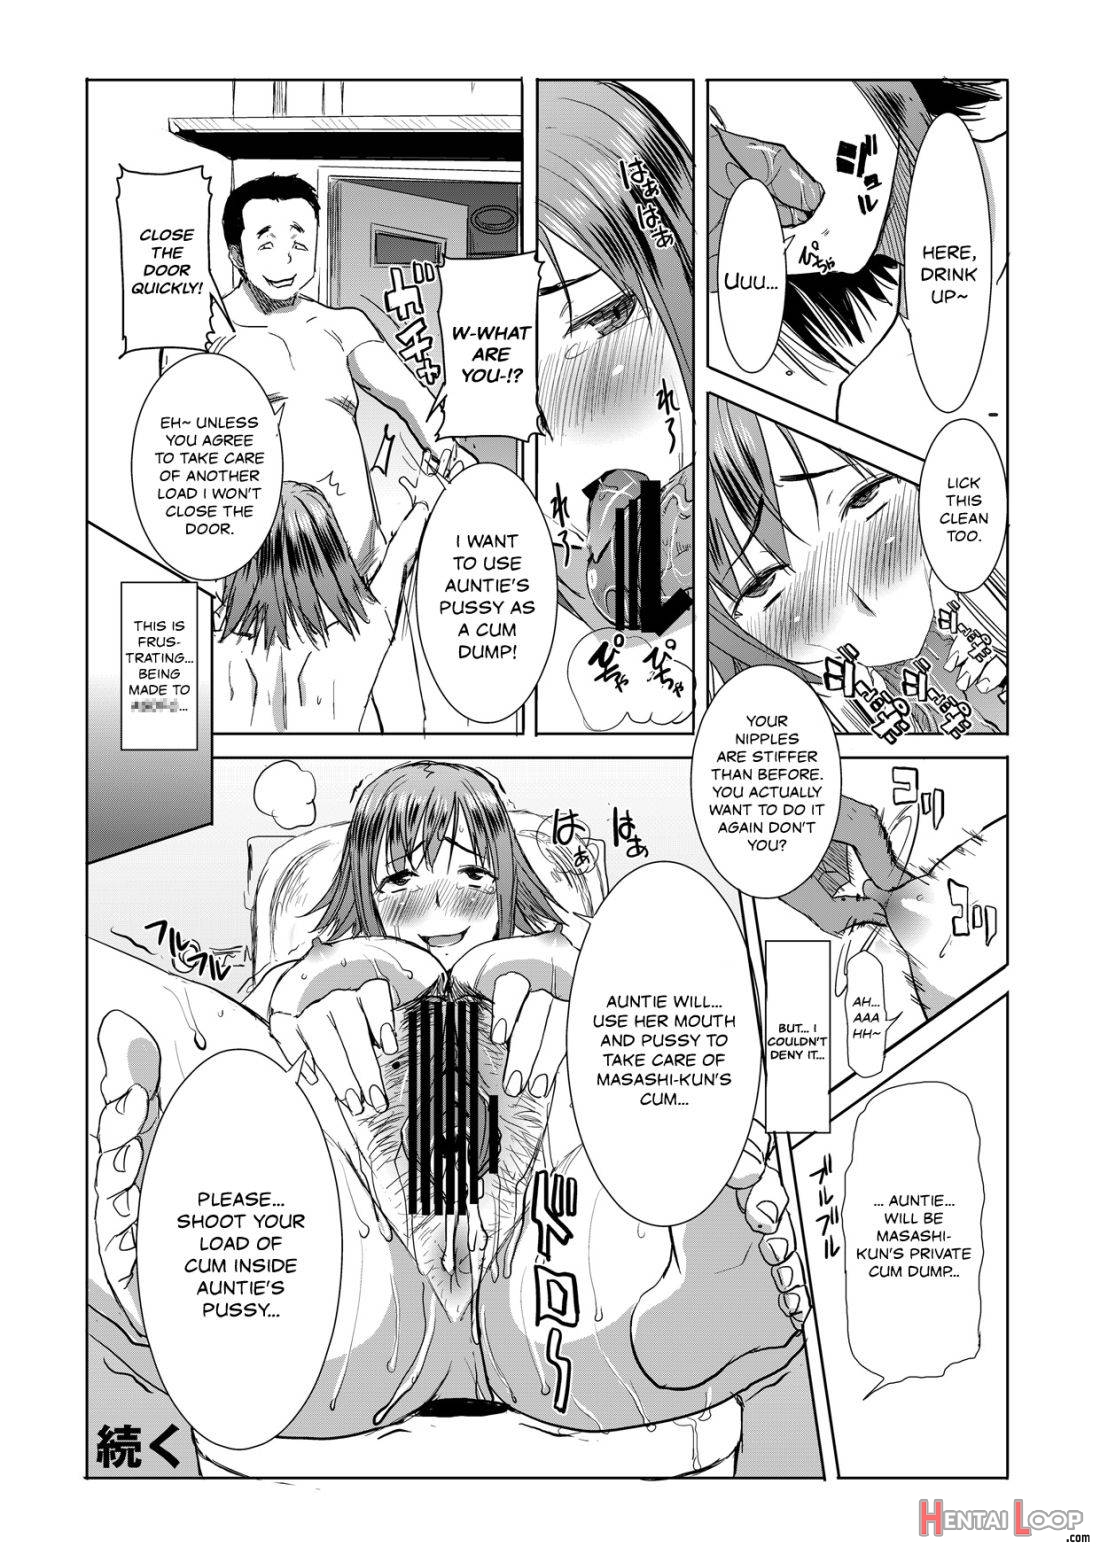 Unsweet Haha Wakui Kazumi Side Adachi Masashi Digital Vol. 1 page 17